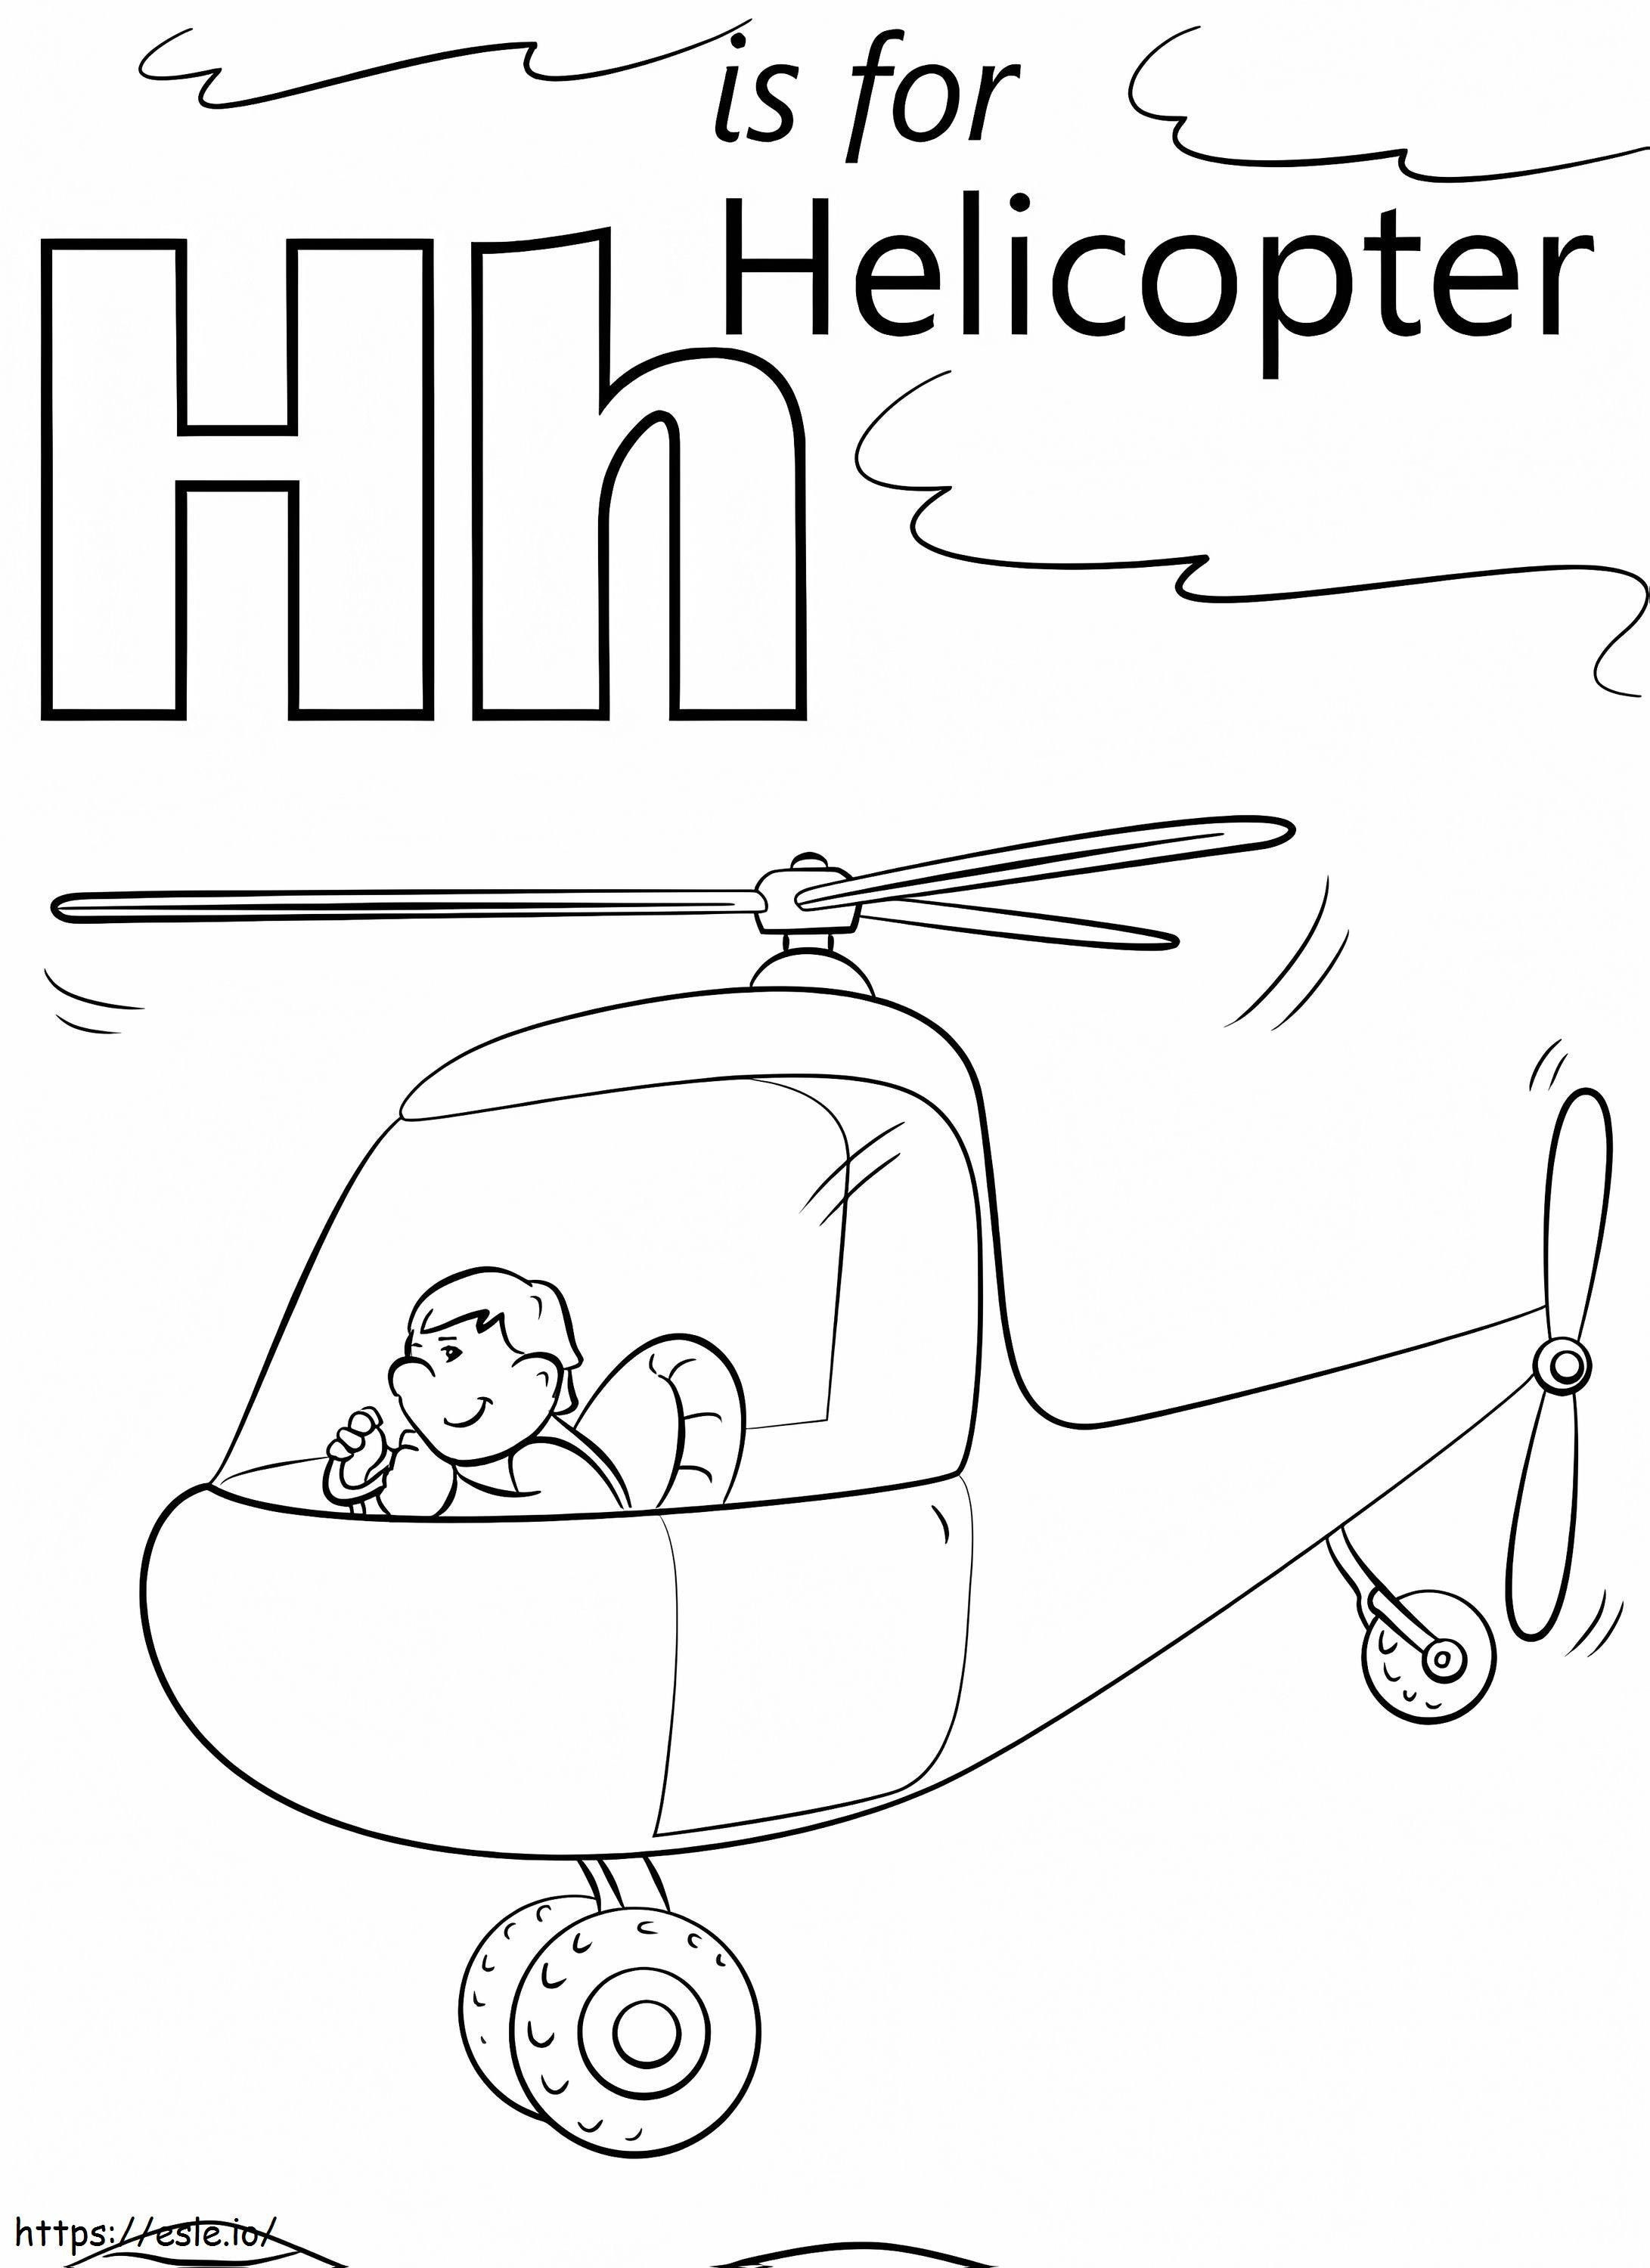 Elicopter litera H de colorat